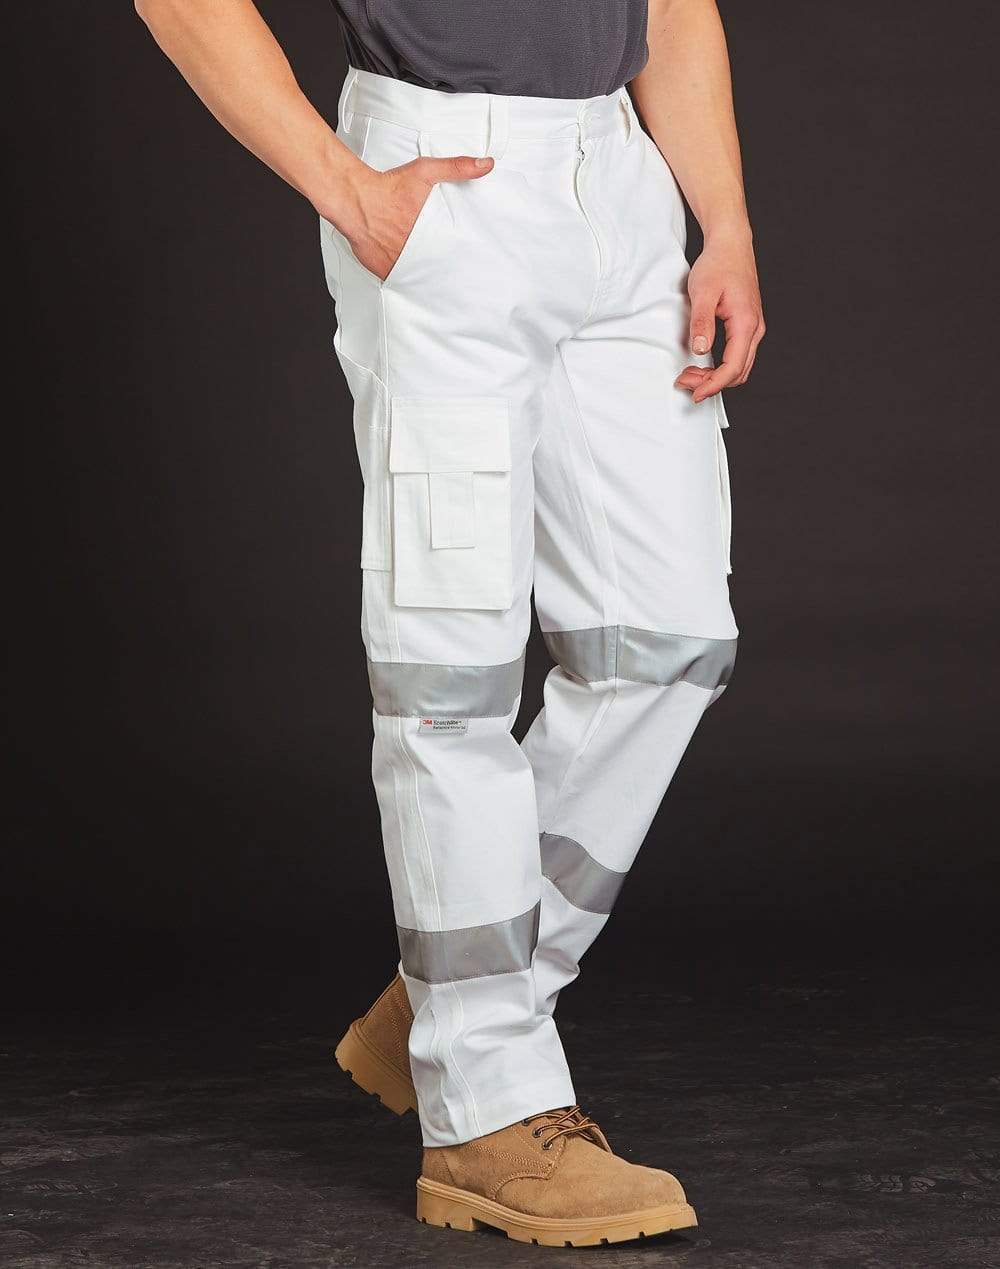 Winning Spirit Mens White Safety Pants With Biomotion Tape Configuration Wp18hv Work Wear Winning Spirit White 72 R 